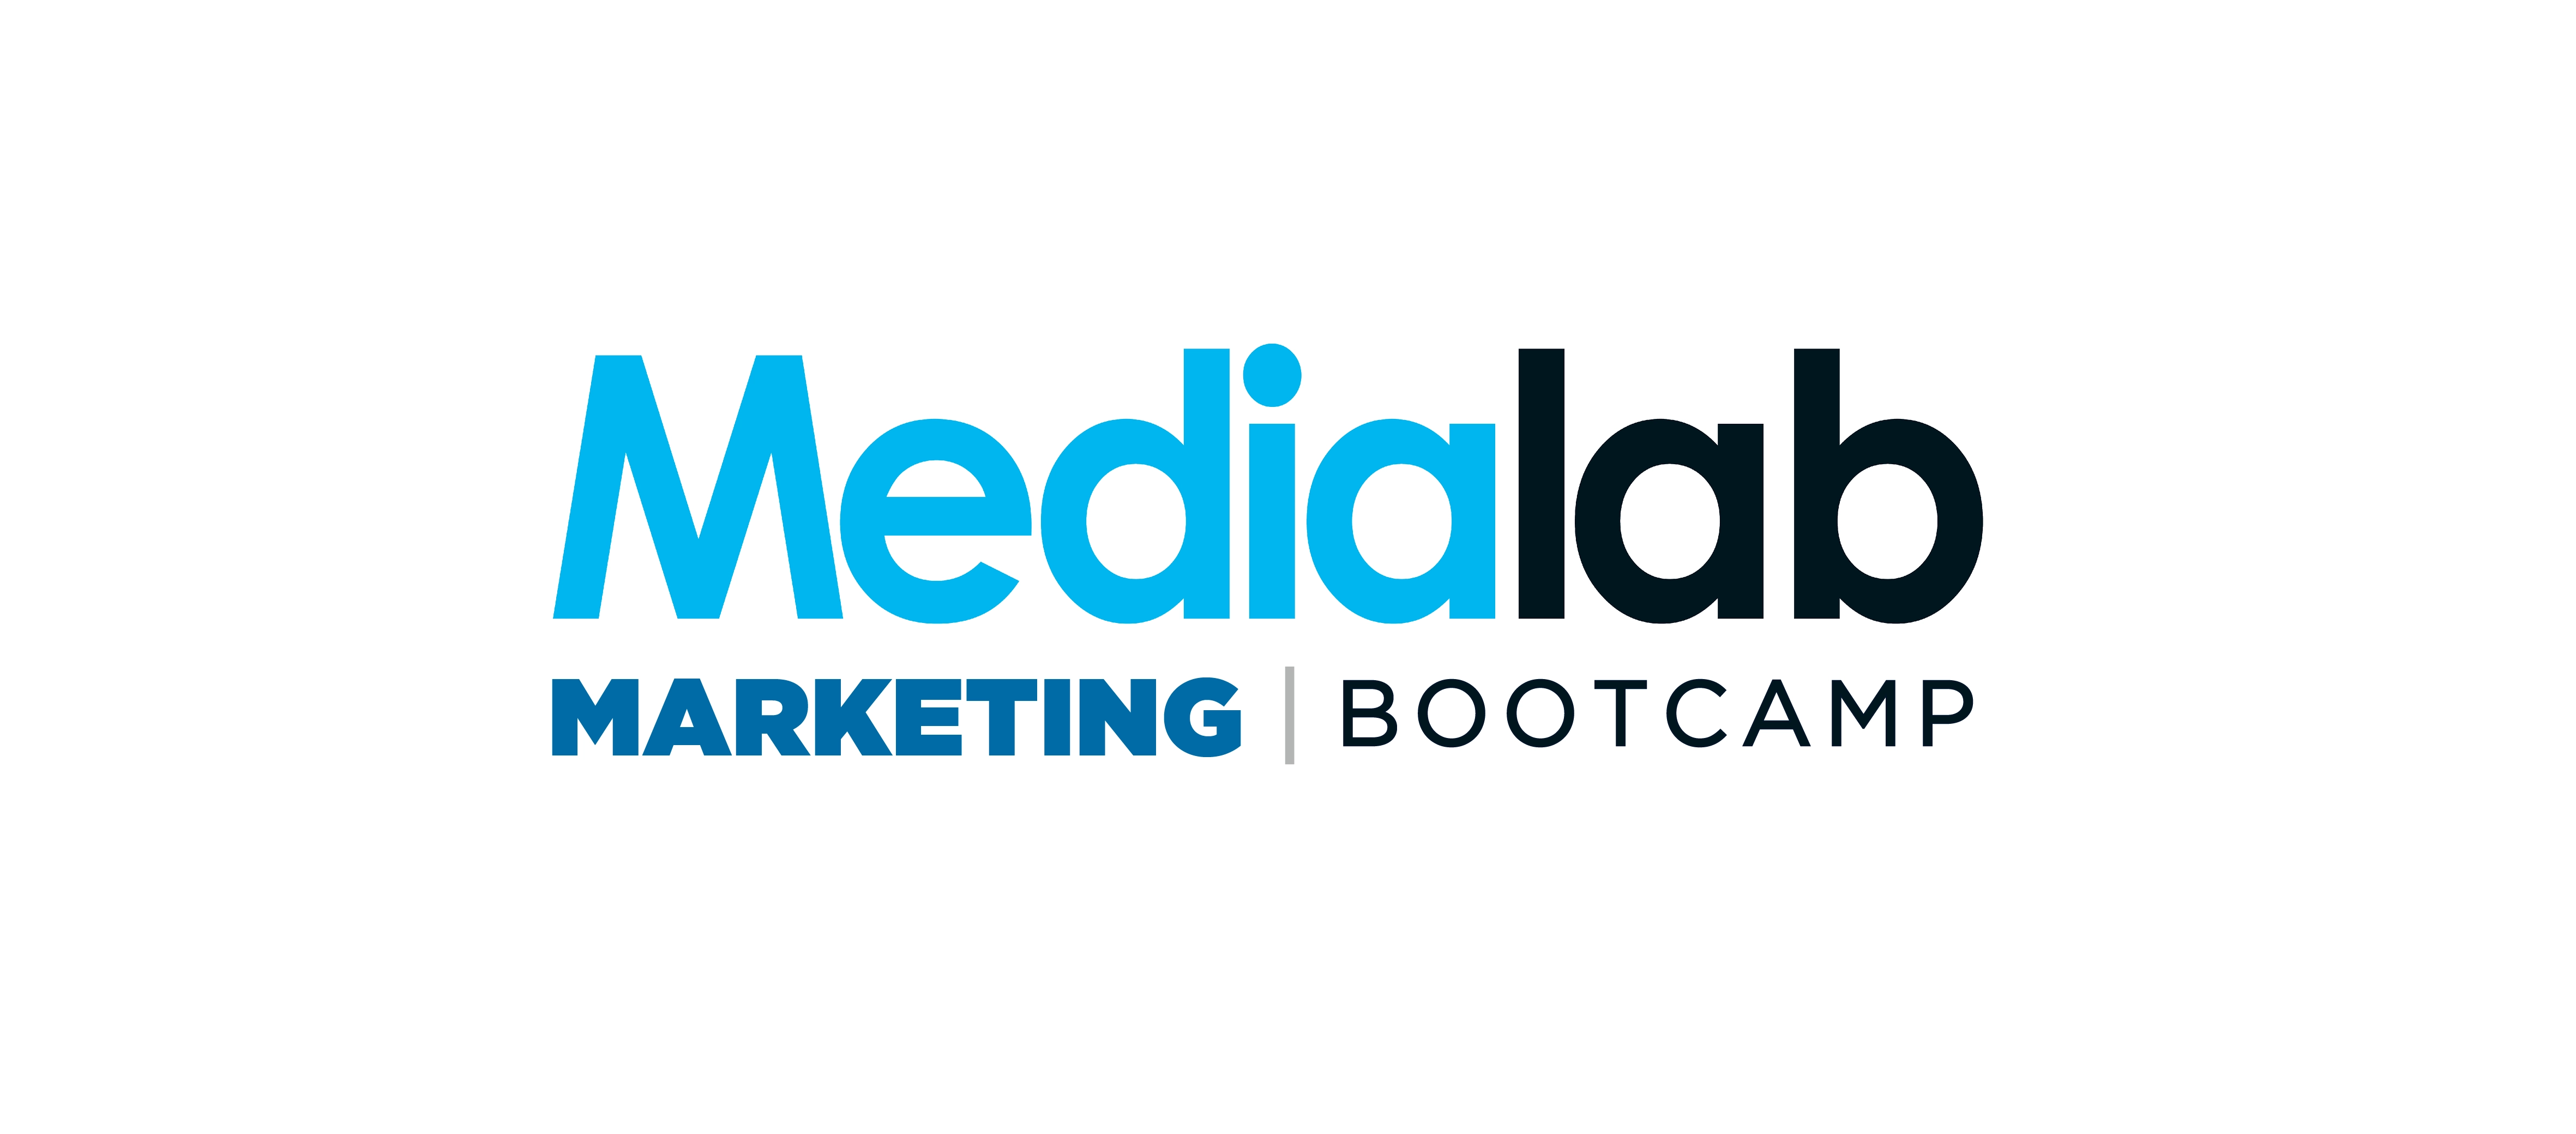 Marketing Bootcamp Logo 22.png